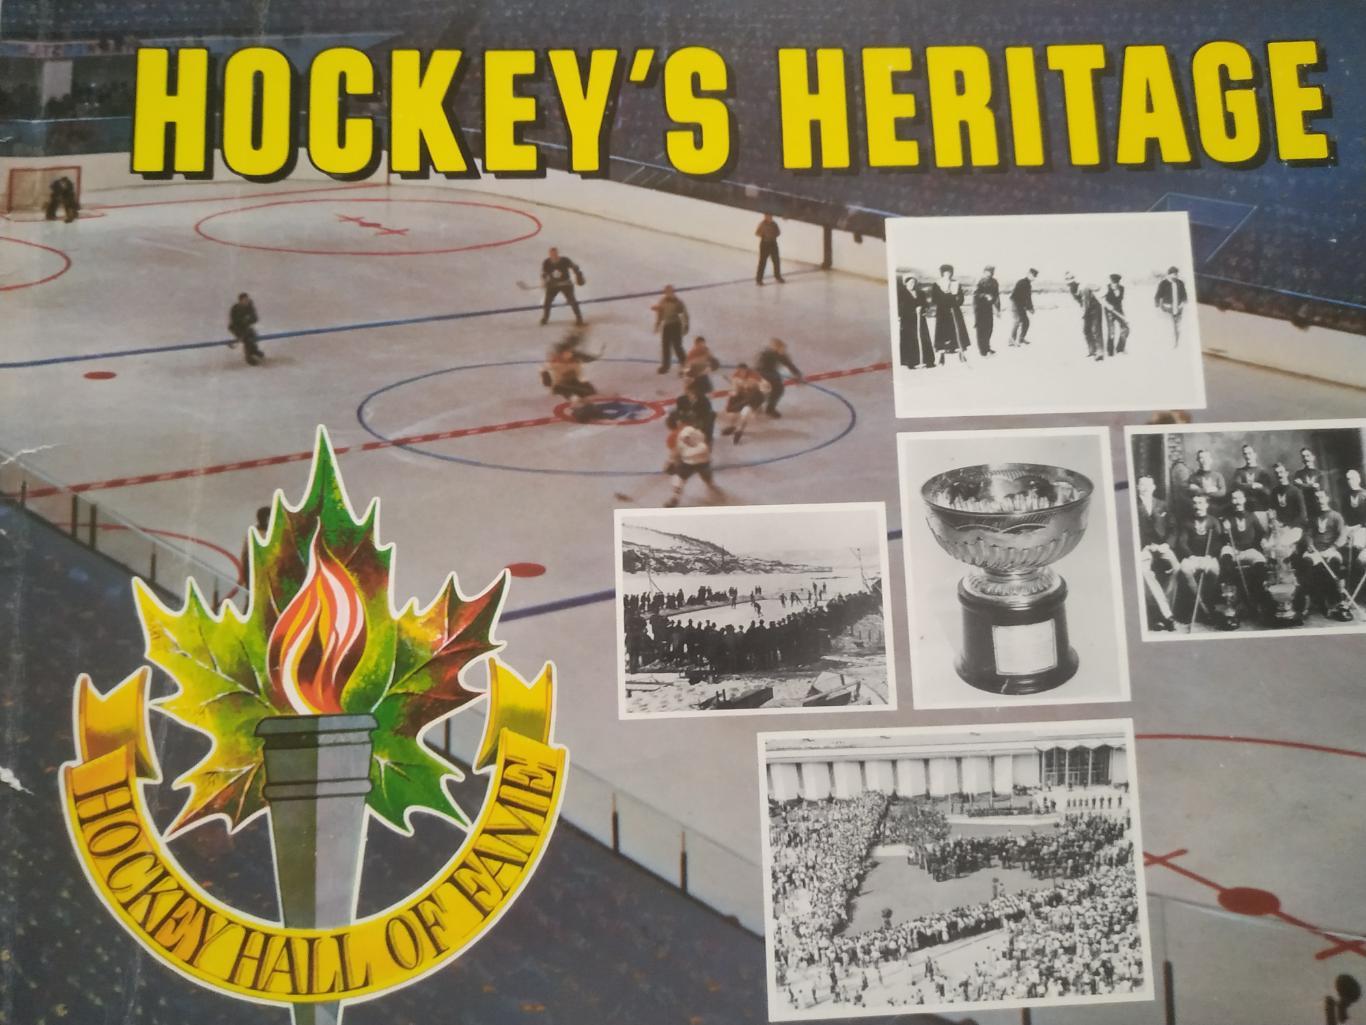 ХОККЕЙ СПРАВОЧНИК ЕЖЕГОДНИК ЗАЛ СЛАВЫ НХЛ NHL 1982 HOCKEY HALL OF FAME HERITAGE